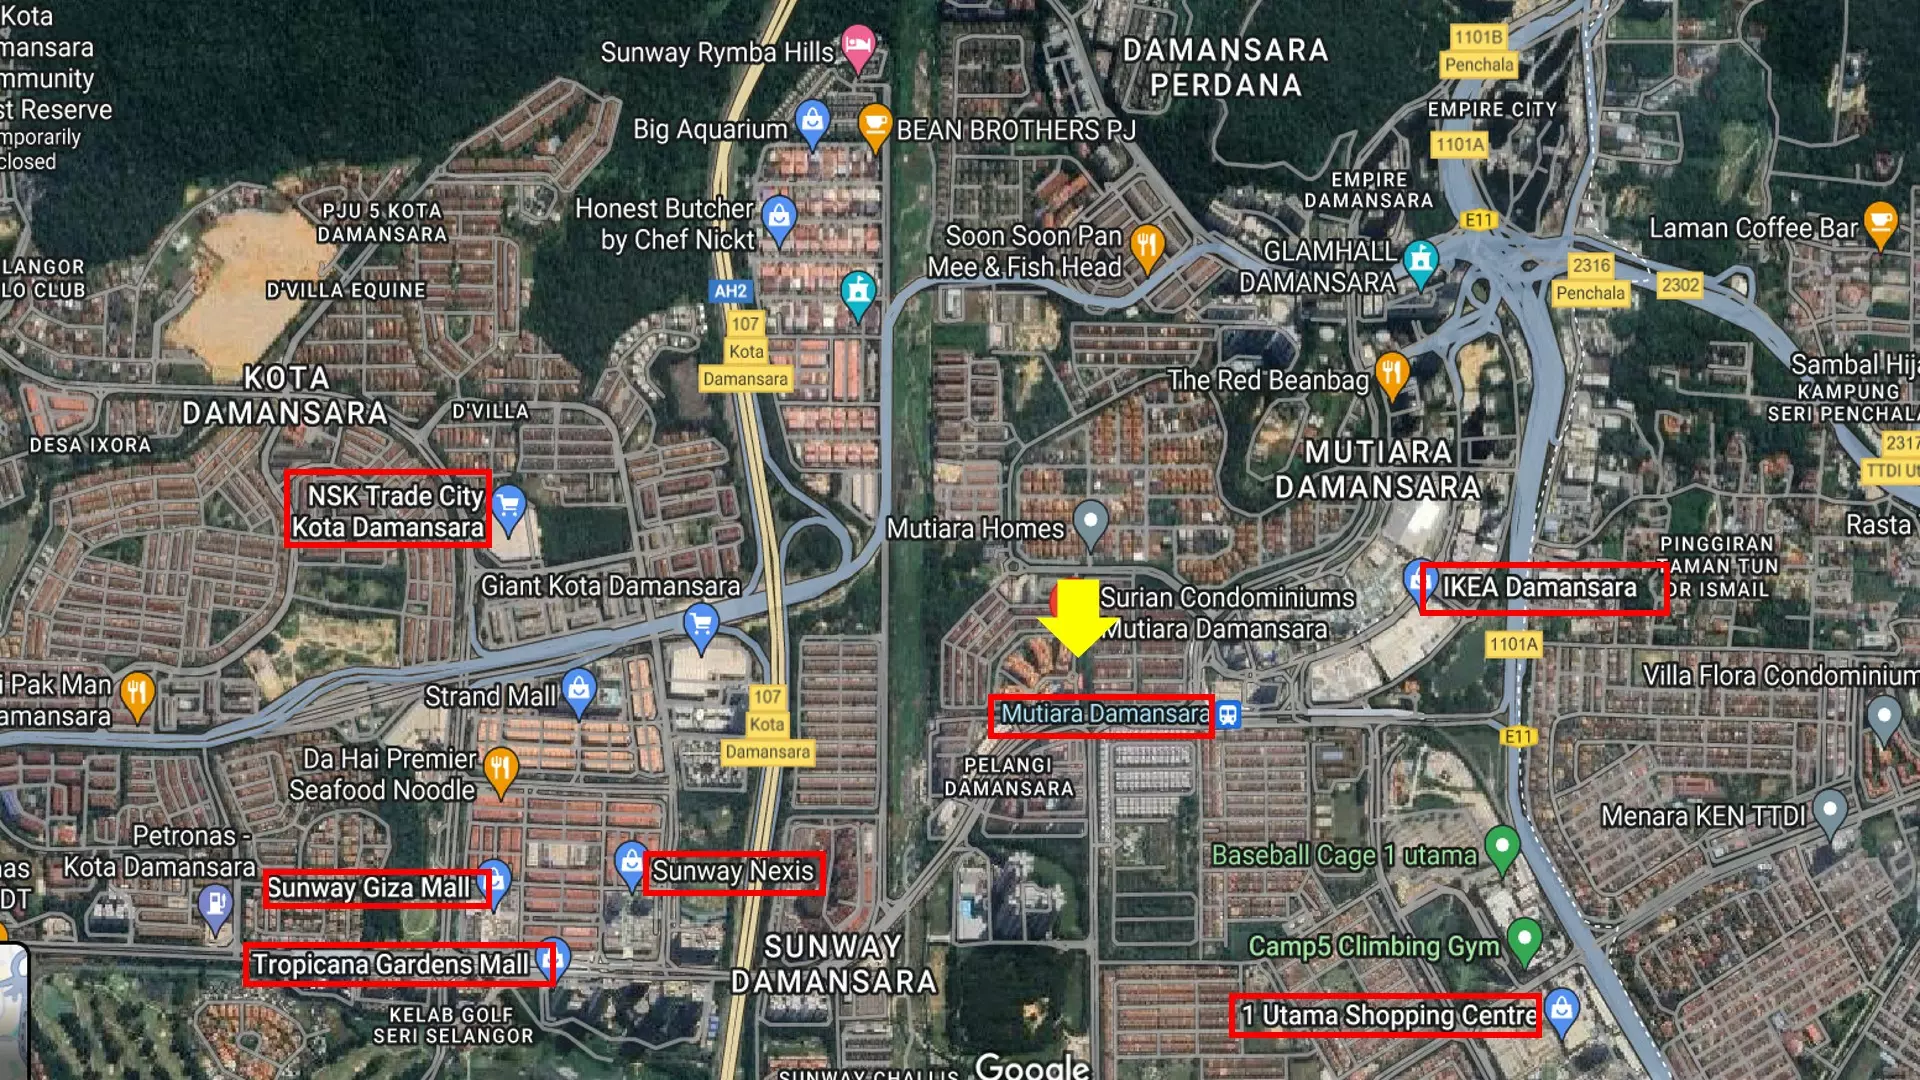 Condominium @ Surian Condominium, Mutiara Damansara, Petaling Jaya, Selangor for Auction 3